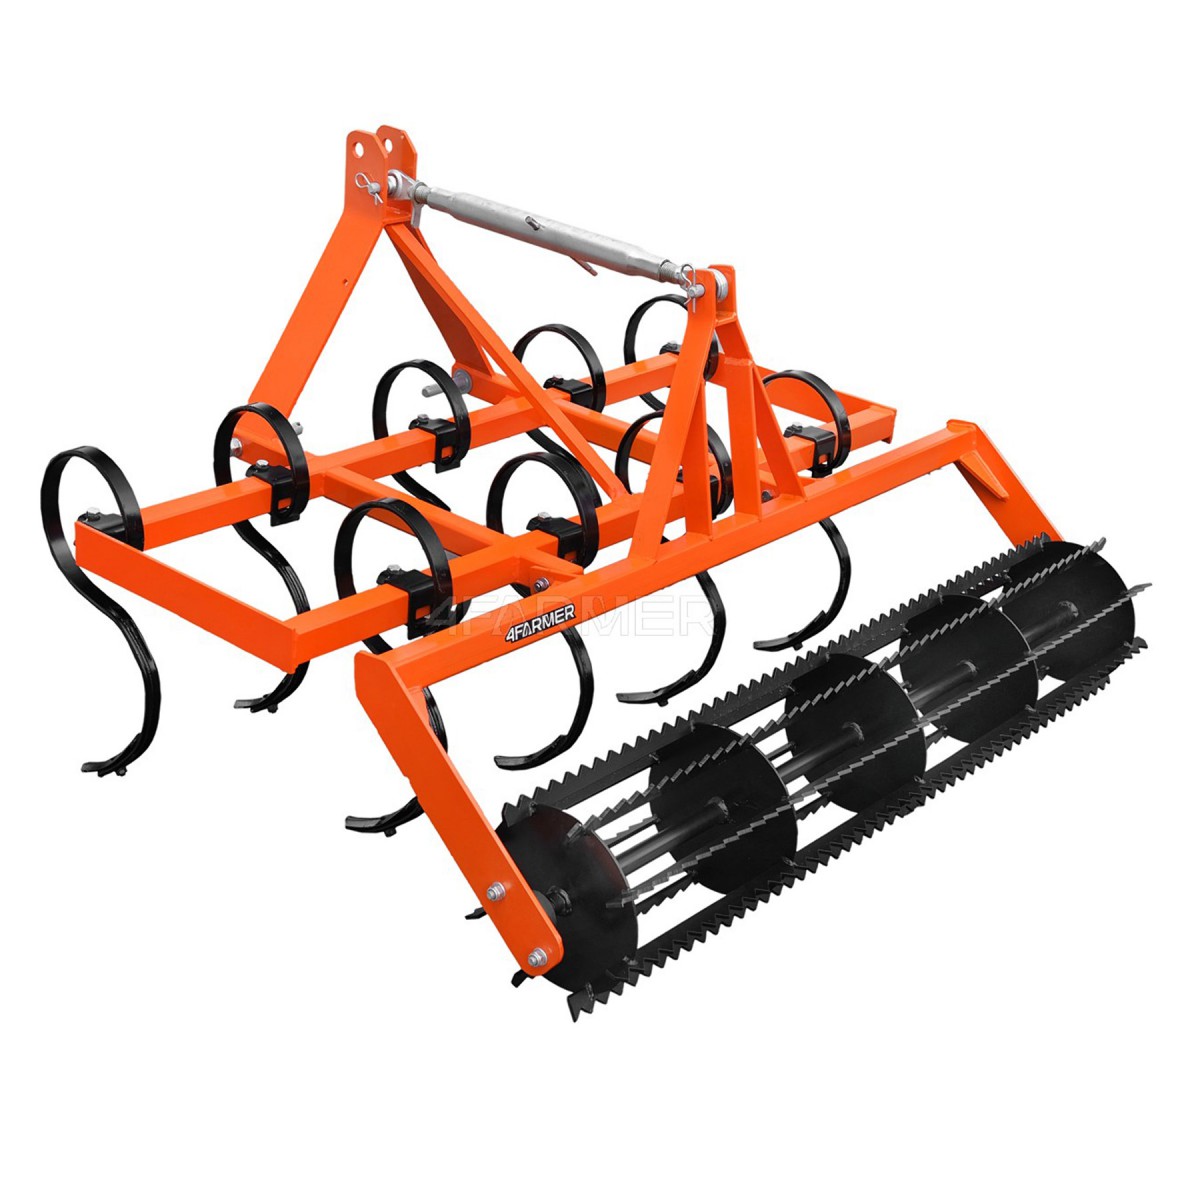 Cultivator 150 Standard + string roller 4FARMER